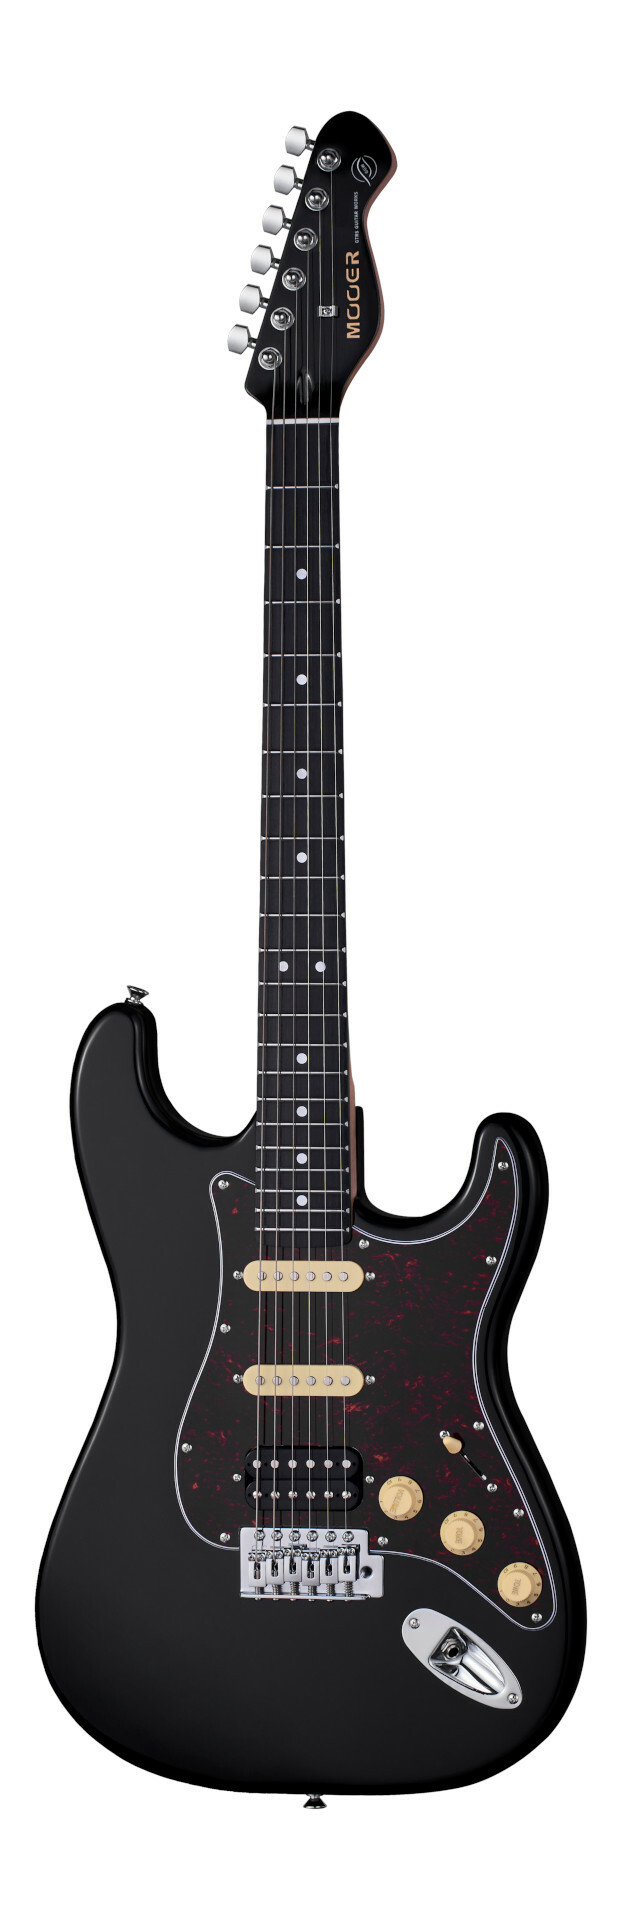 Mooer MSC10 Pro Guitar - Black